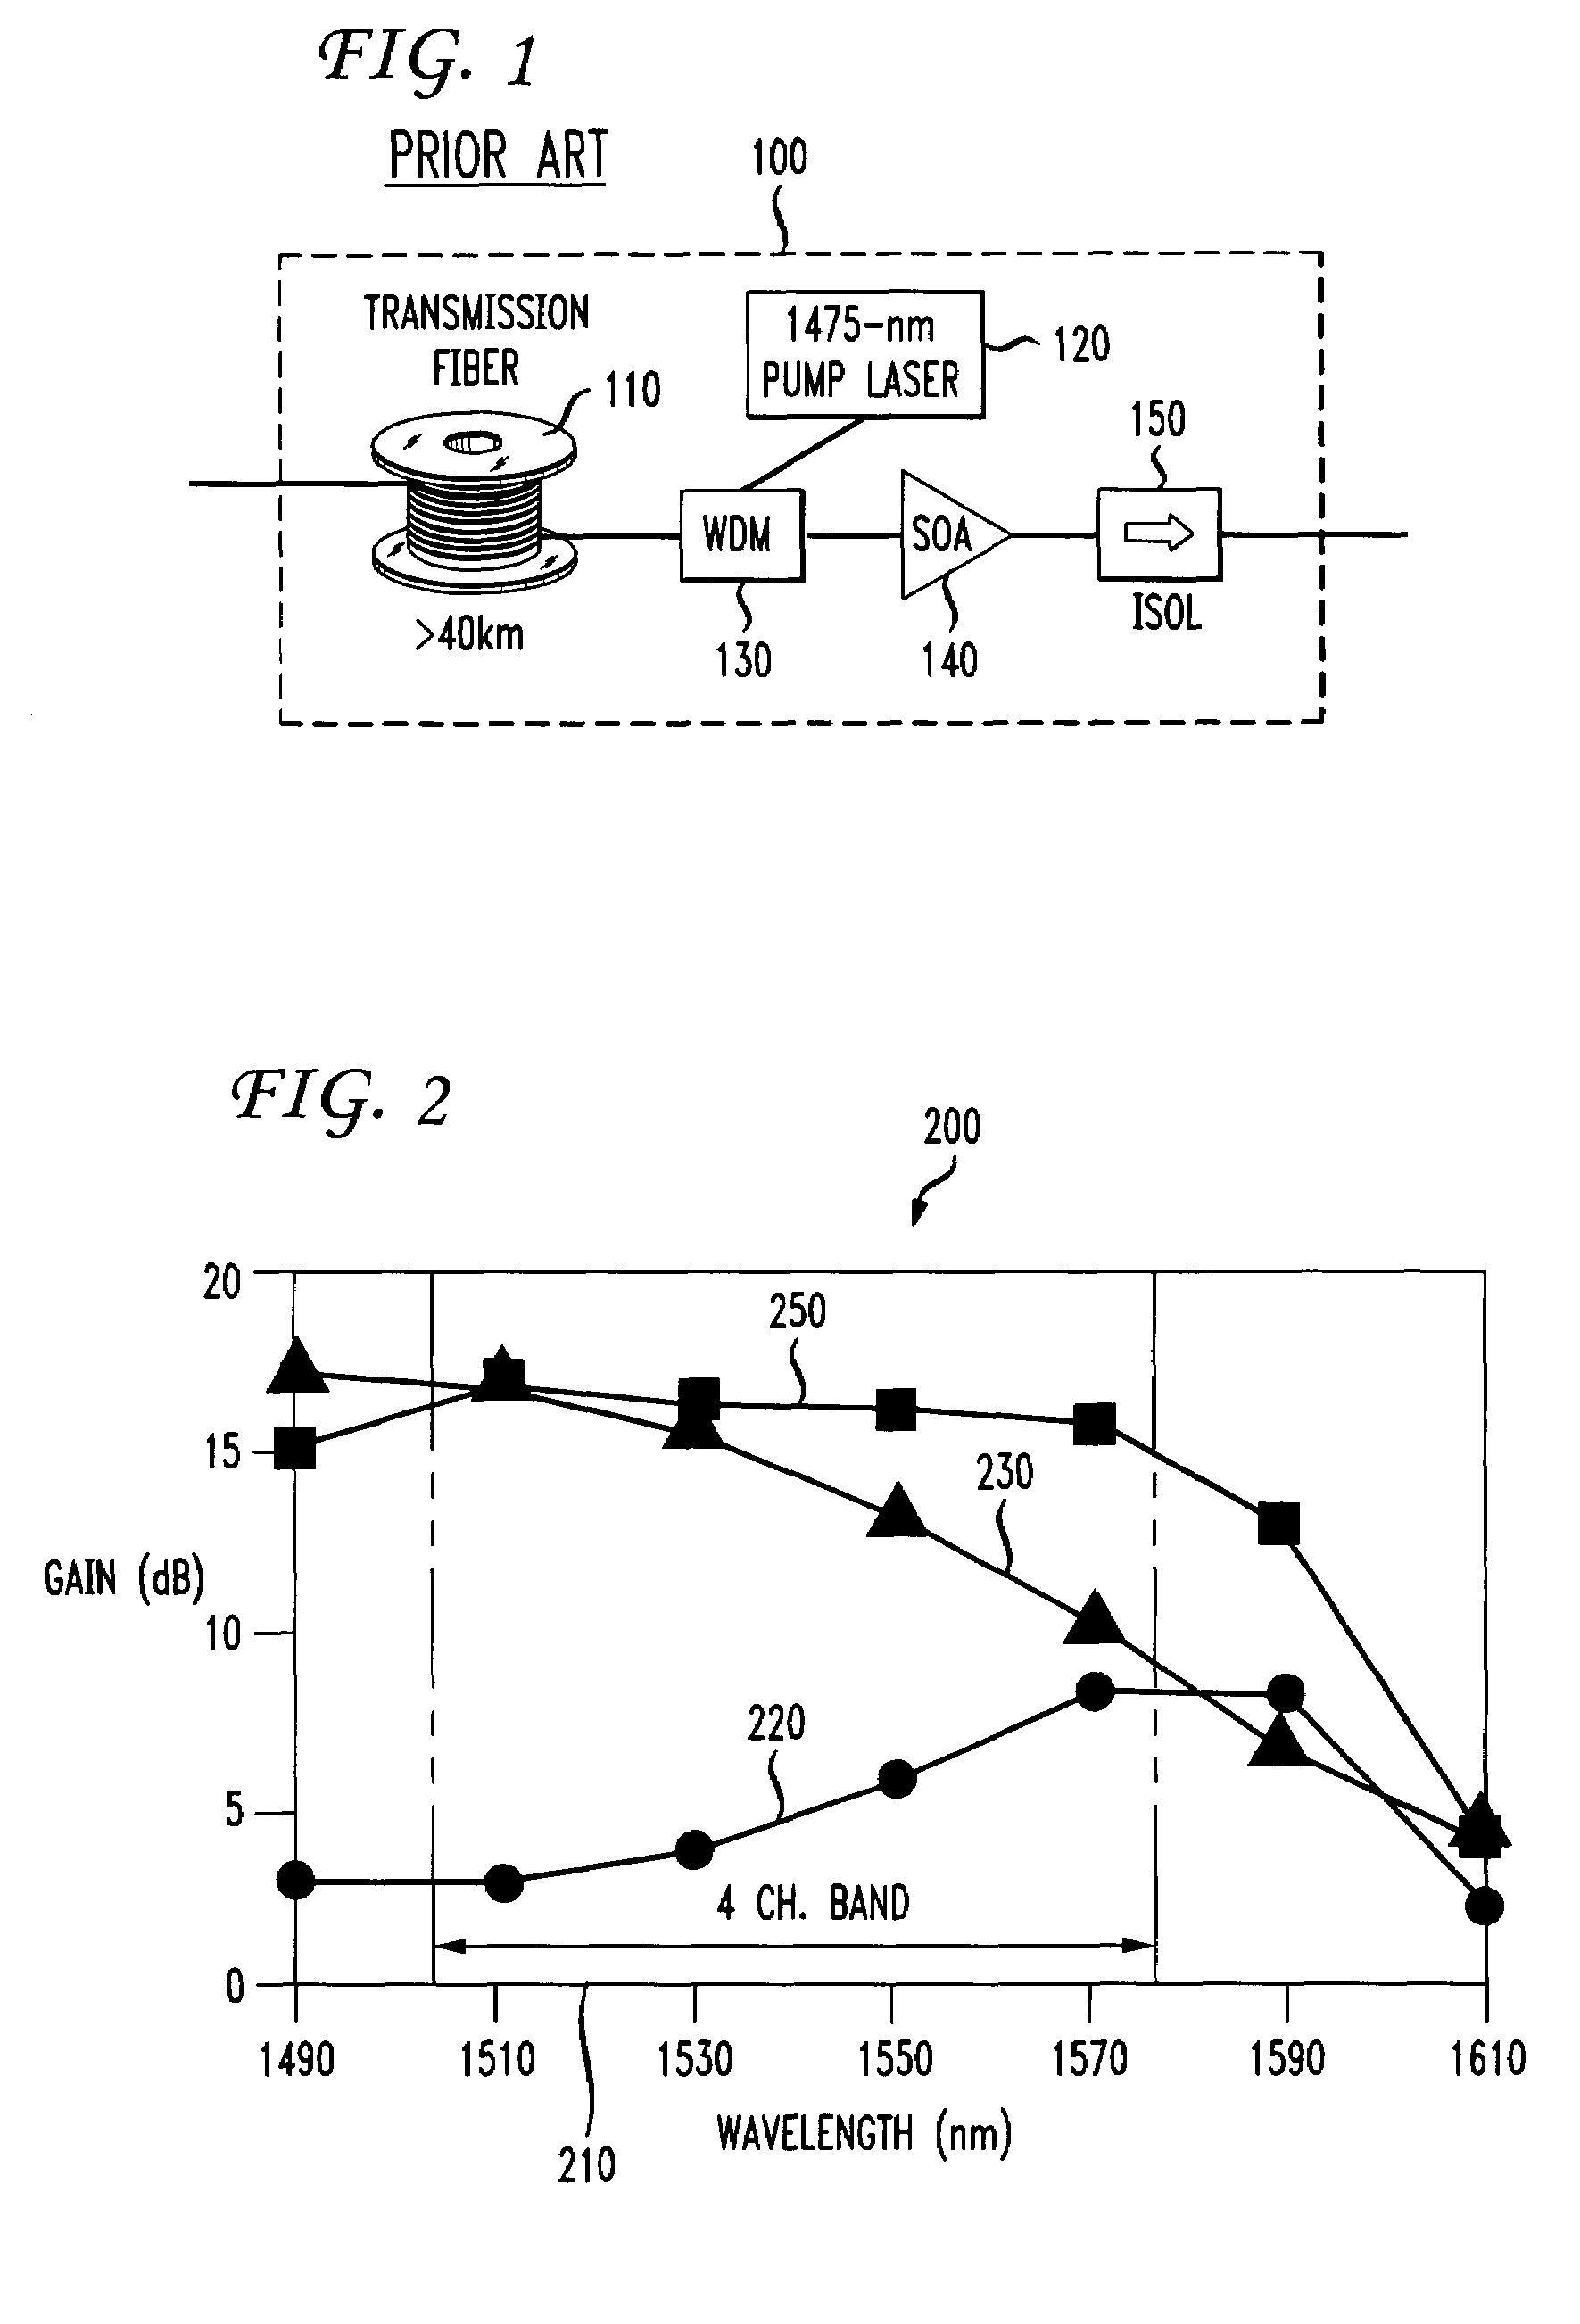 Multiband amplifier based on discrete SOA-Raman amplifiers